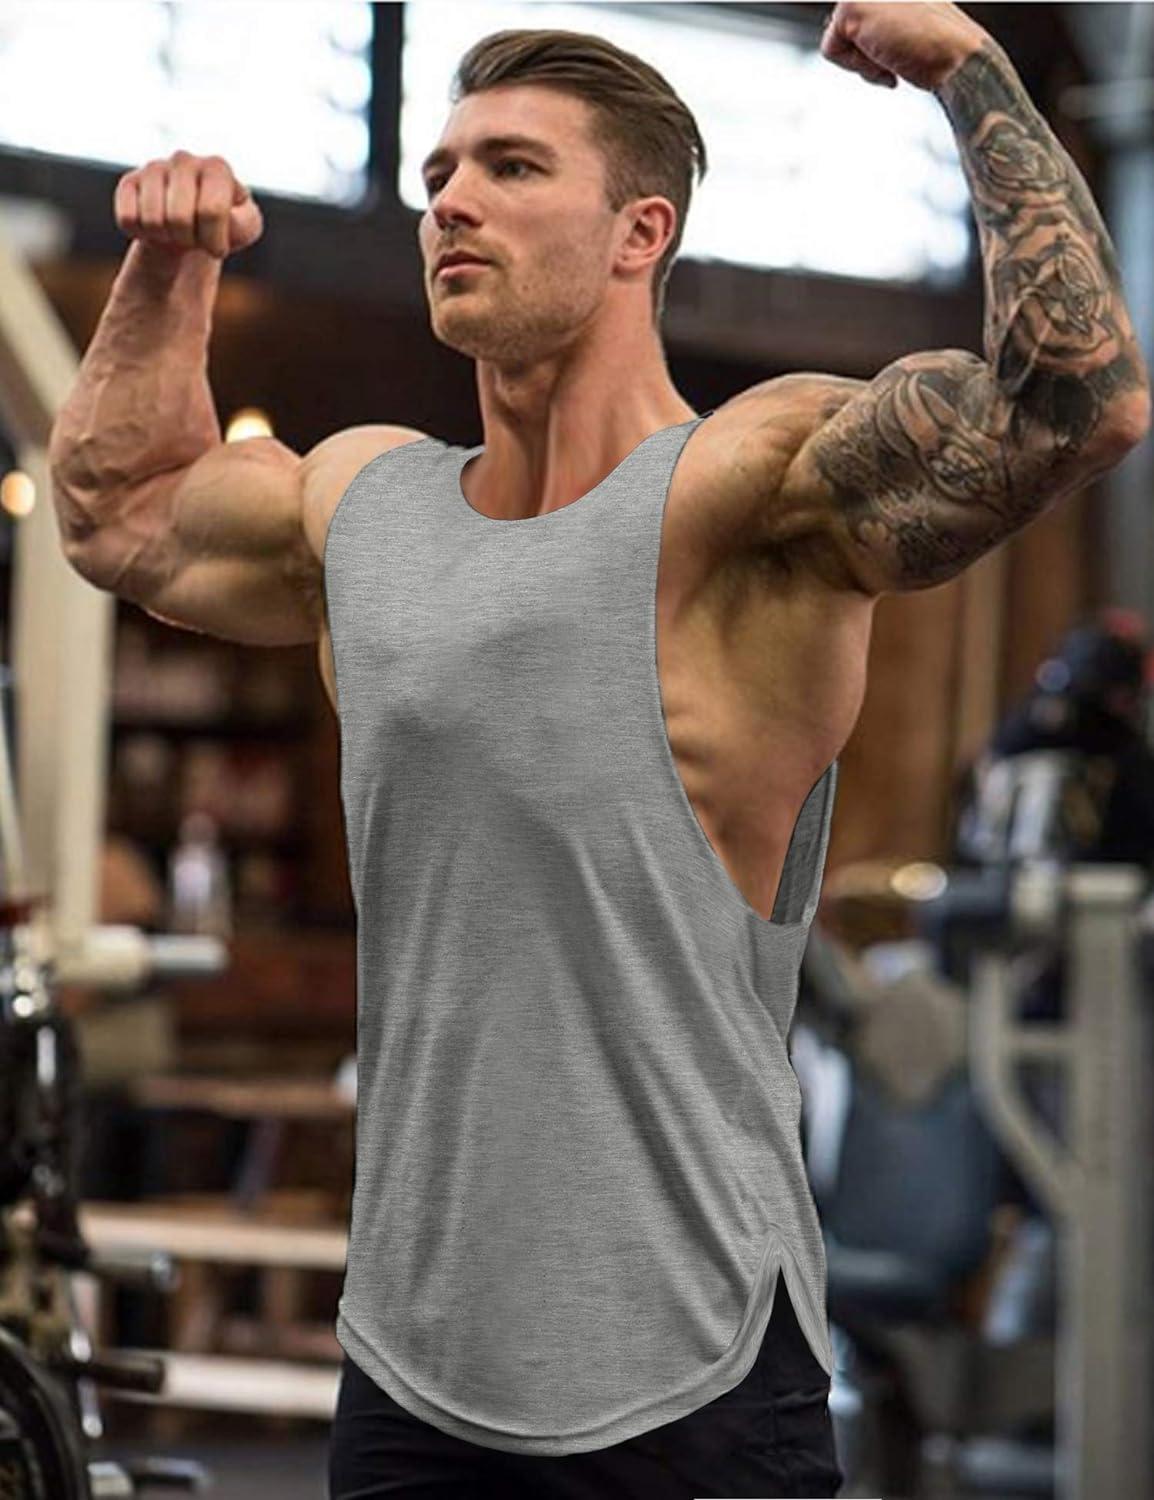 Men's Tank Tops Dry Workout Tank Top Gym Muscle Tee Fitness Bodybuilding  Sleeveless T Shirt Tank Top Beach